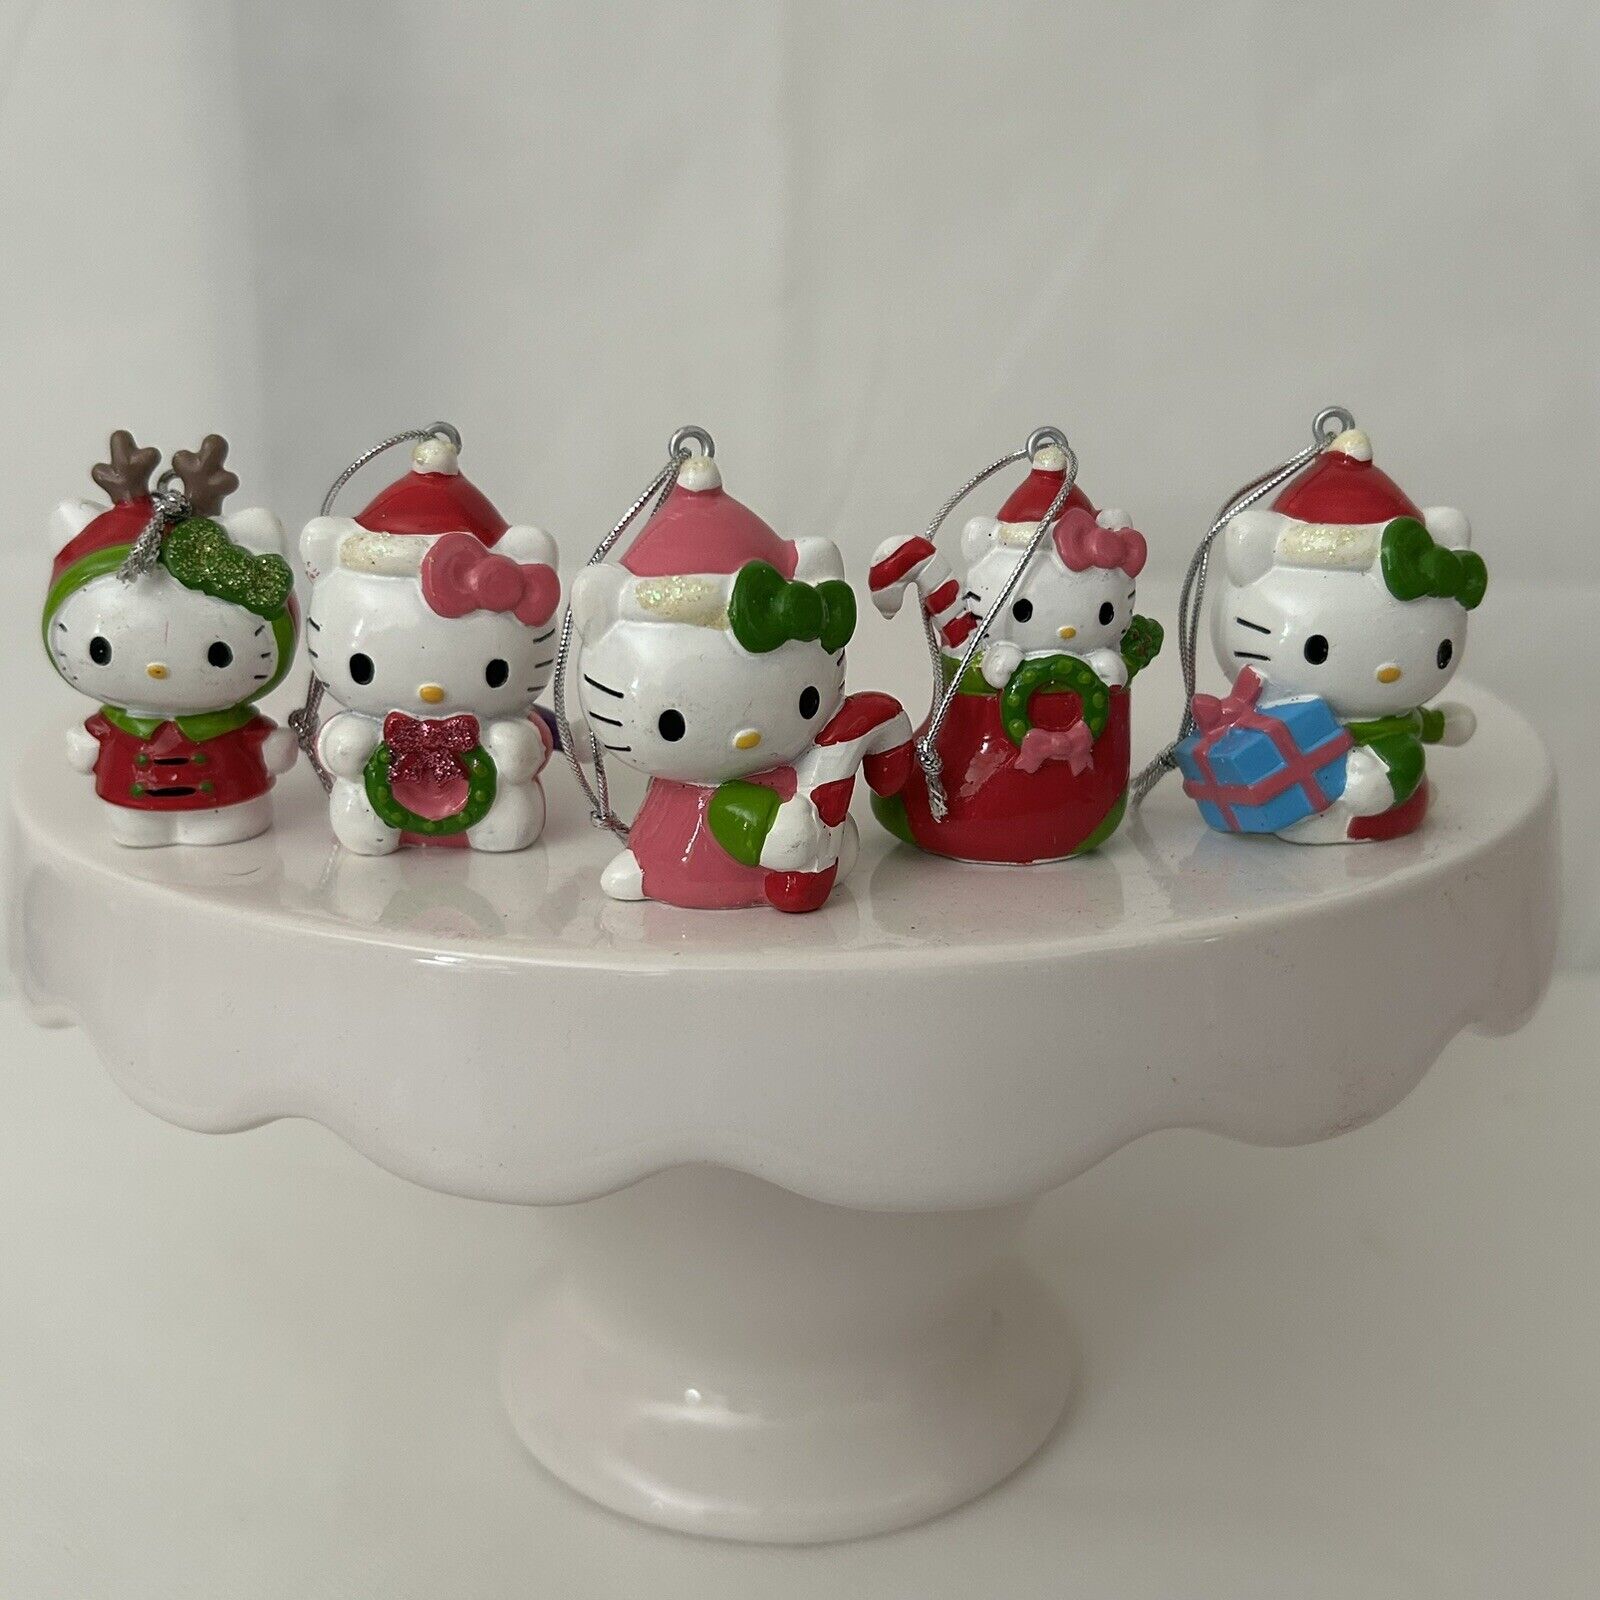 Lot of 5 Hello Kitty Miniature Holiday Christmas Ornaments 2012